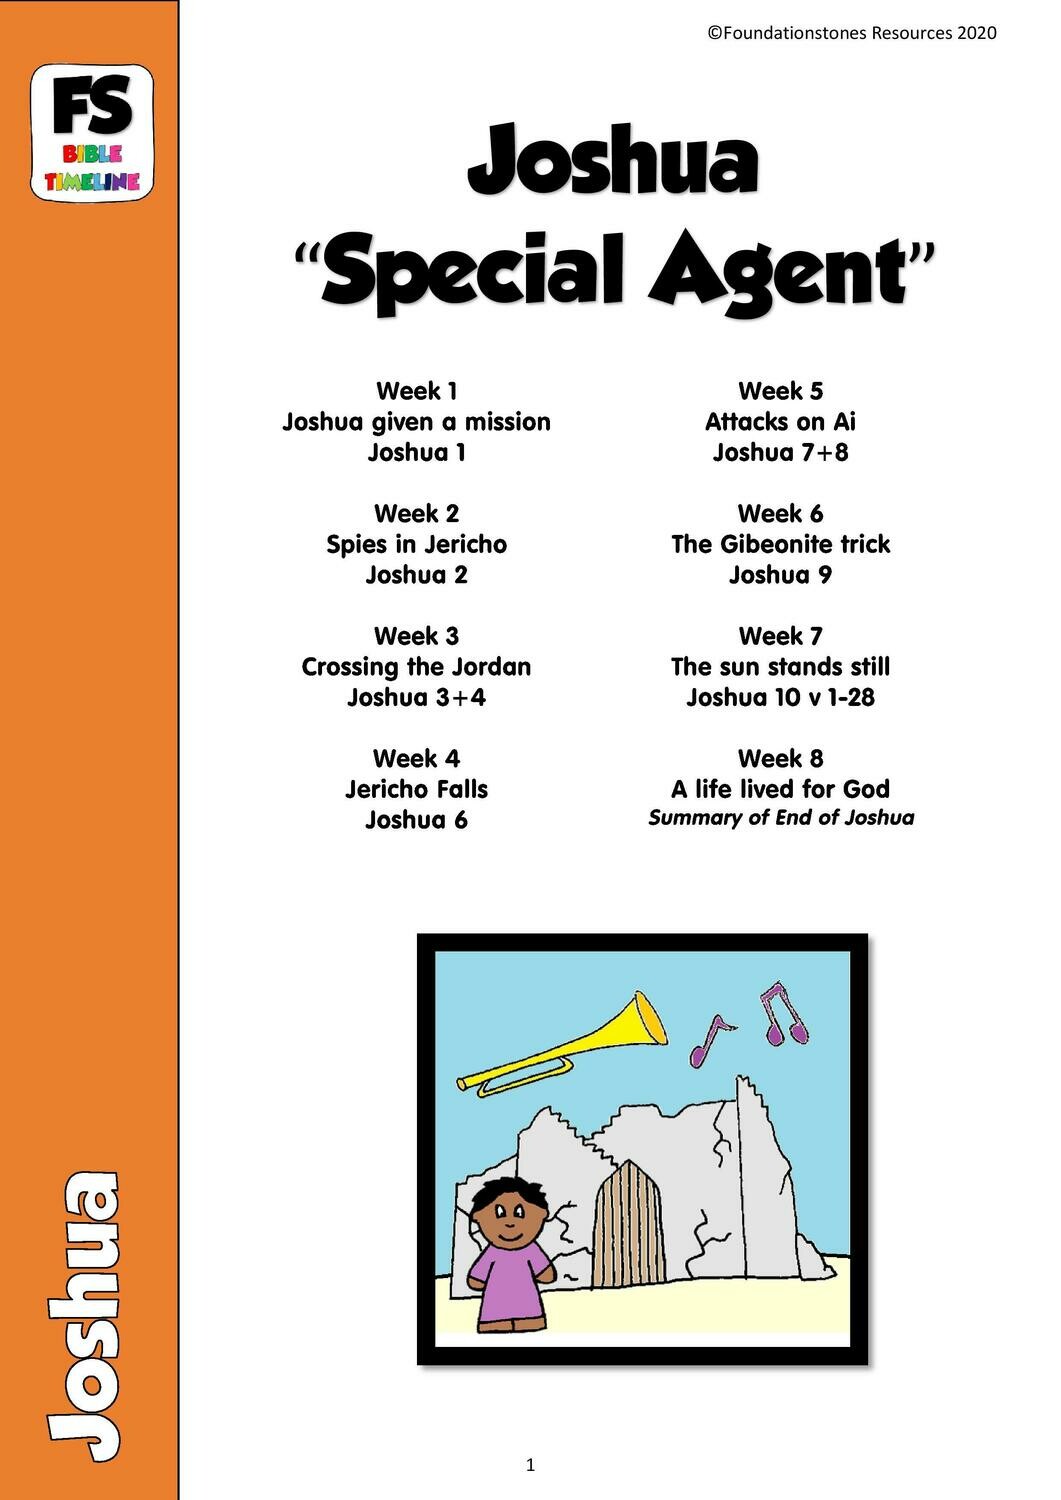 Joshua "Special Agent" - 8 week syllabus